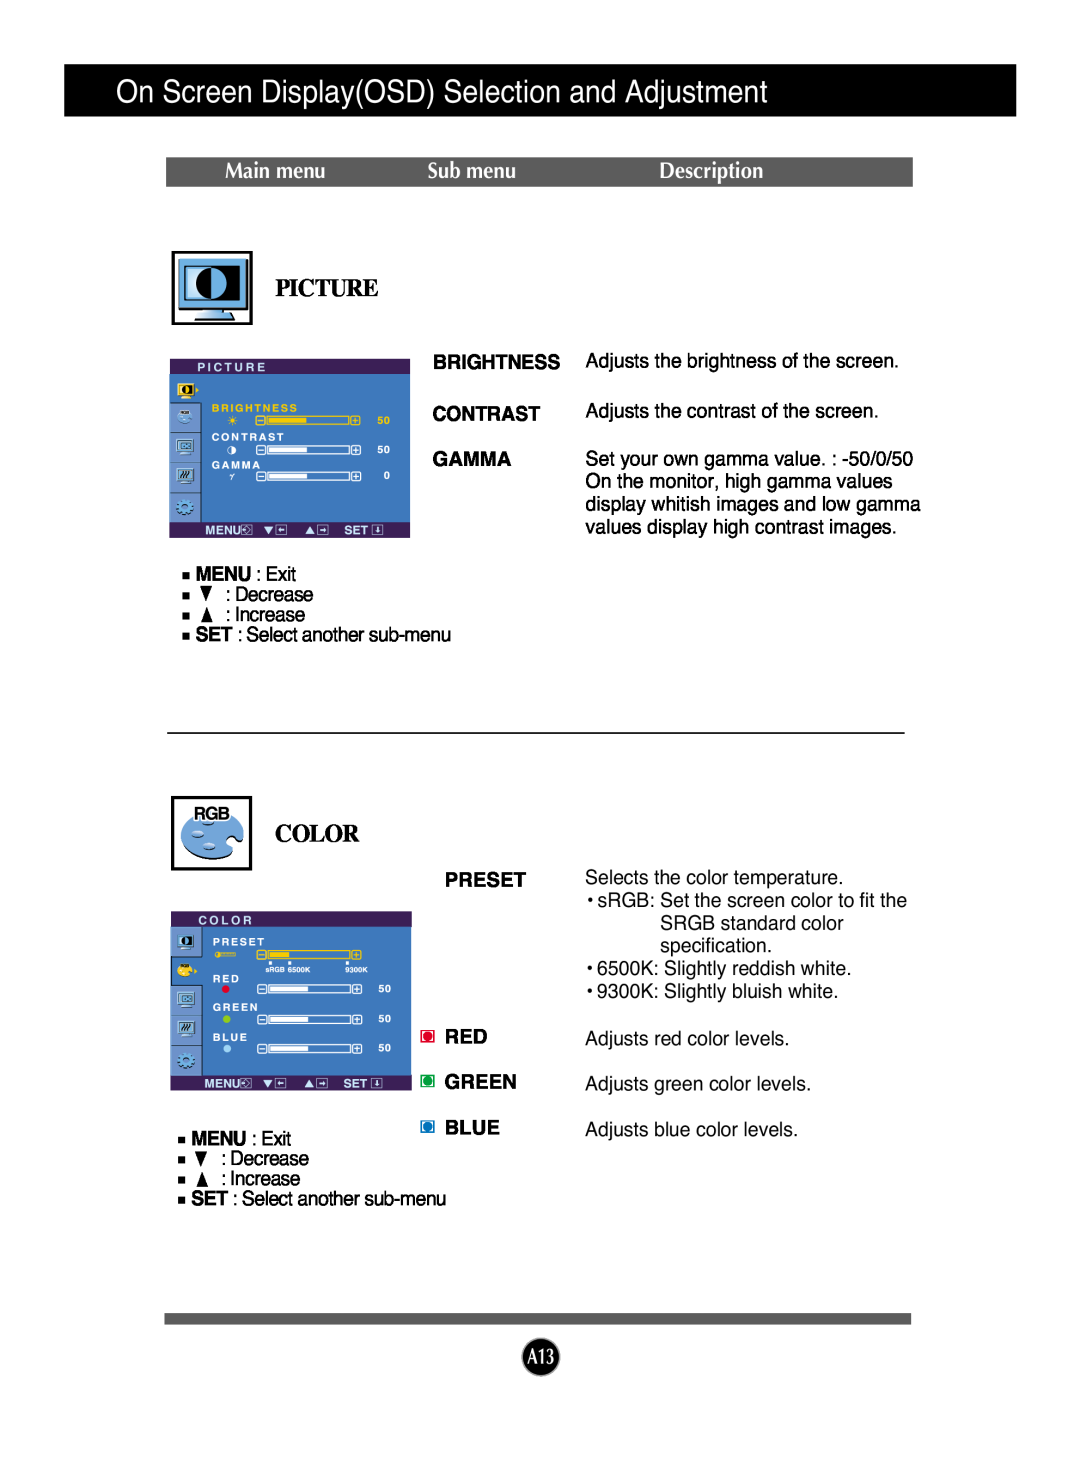 LG Electronics L192WS Picture, Color, Main menu, Sub menu, Description, On Screen DisplayOSD Selection and Adjustment 